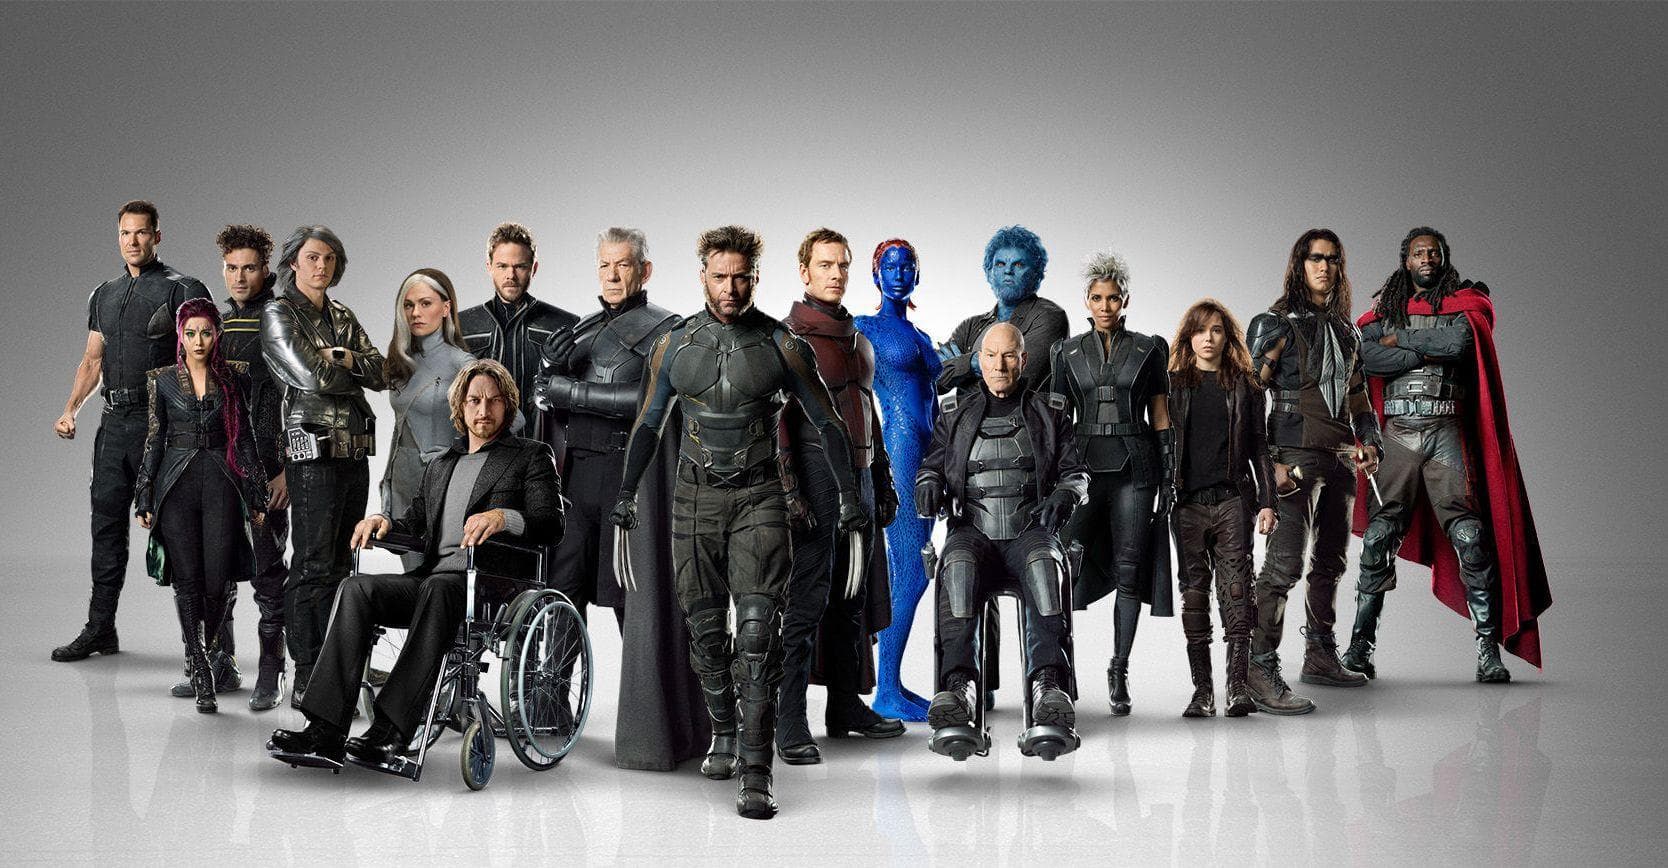 The Full List of X-Men Characters & Members